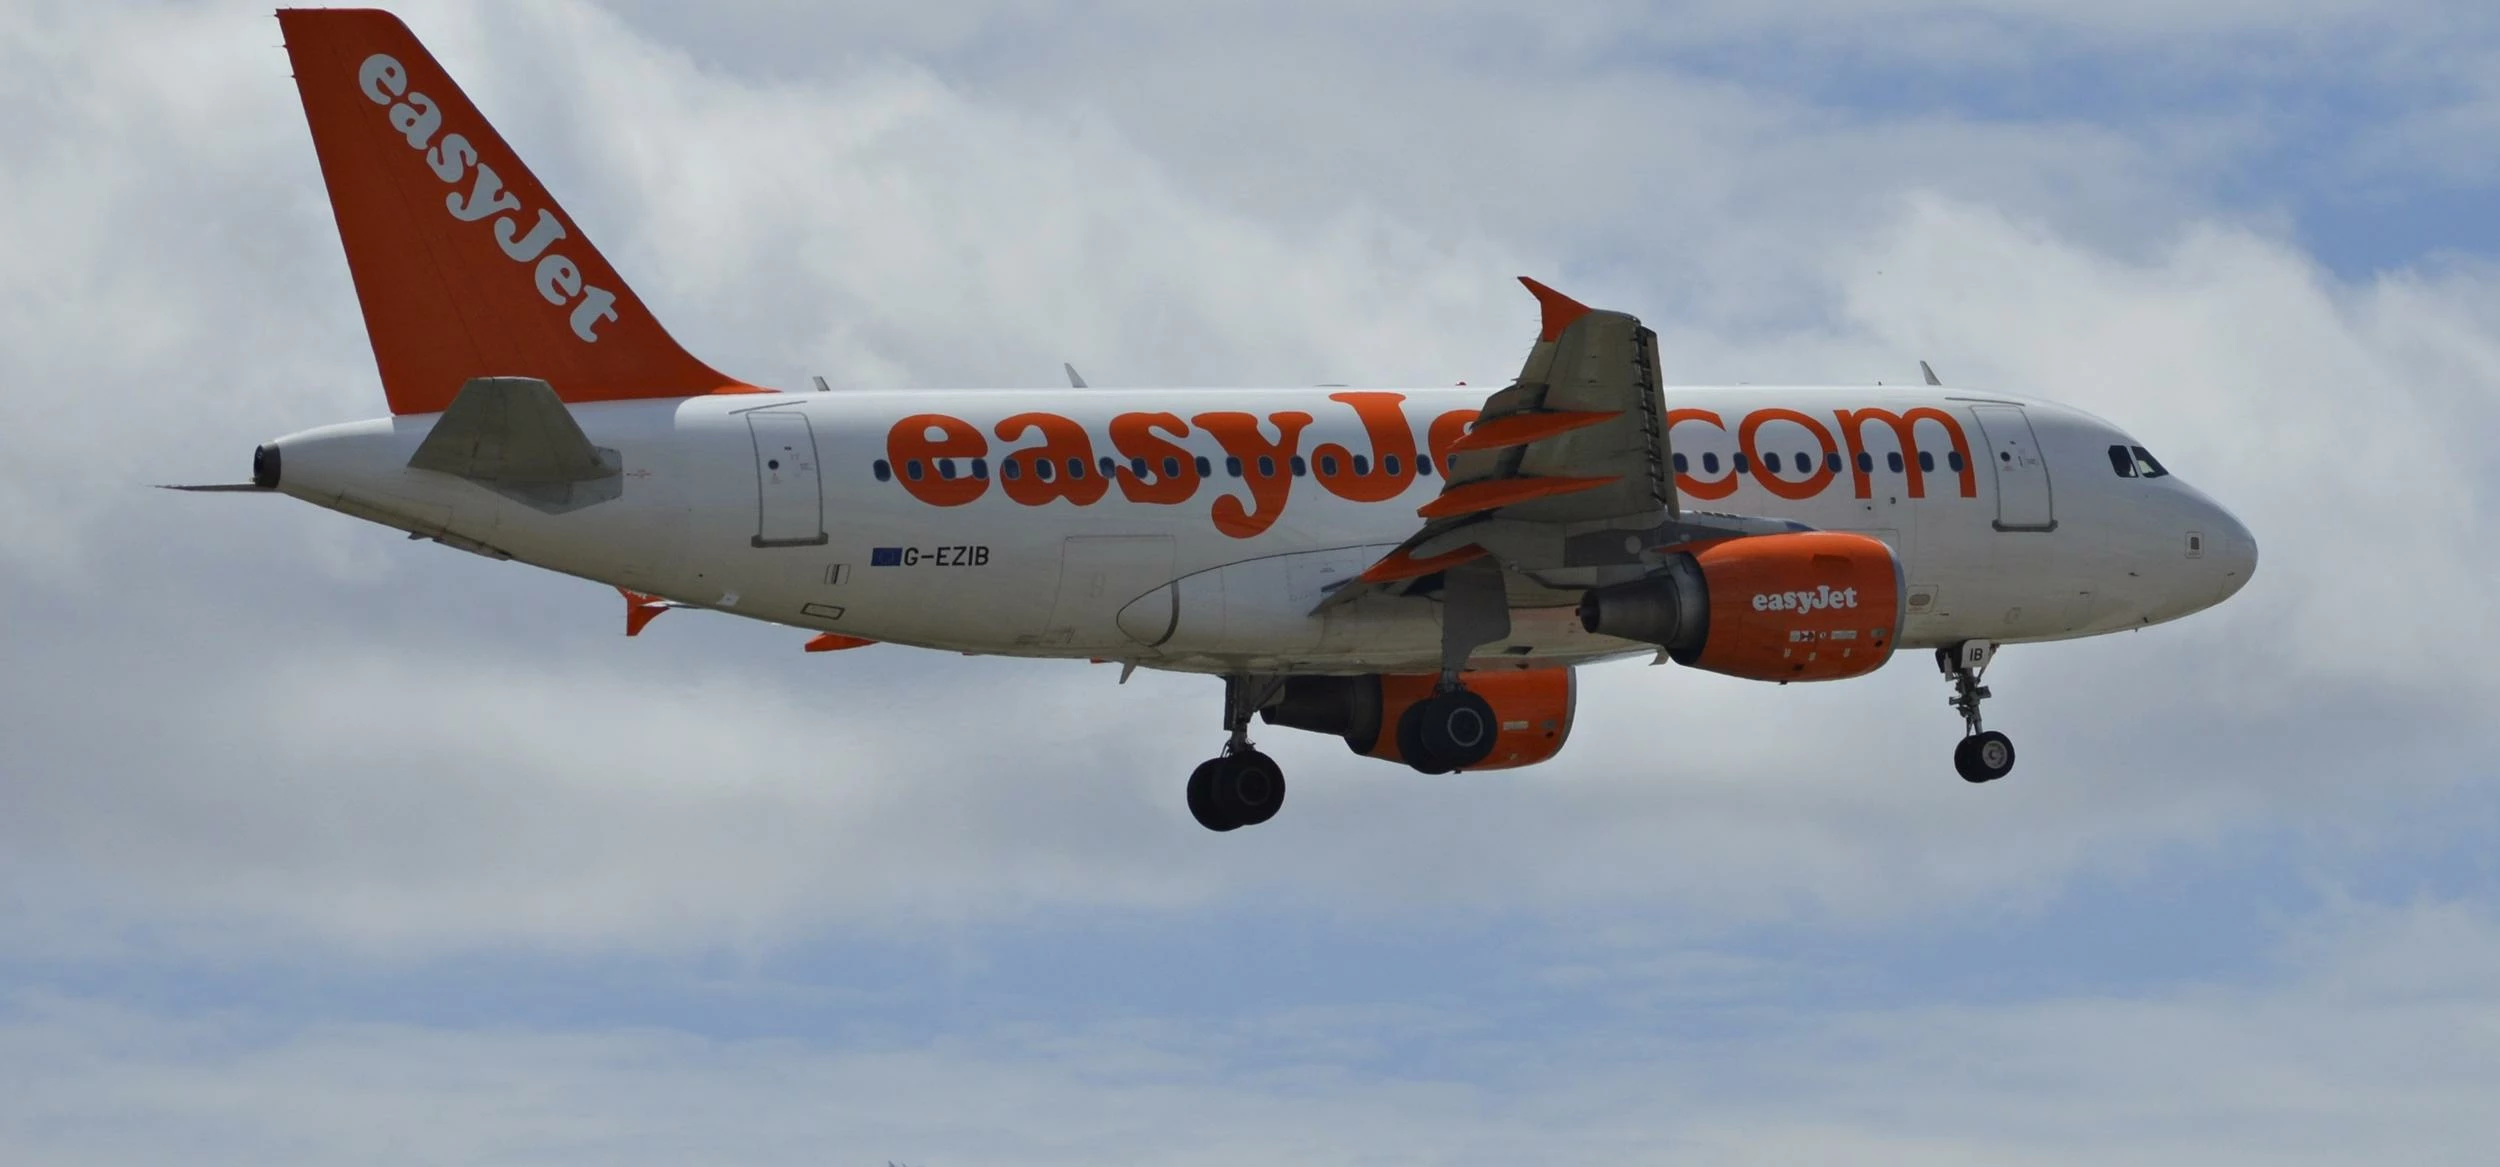 EasyJet A318-321 G-EZIB landing at Gatwick Airport